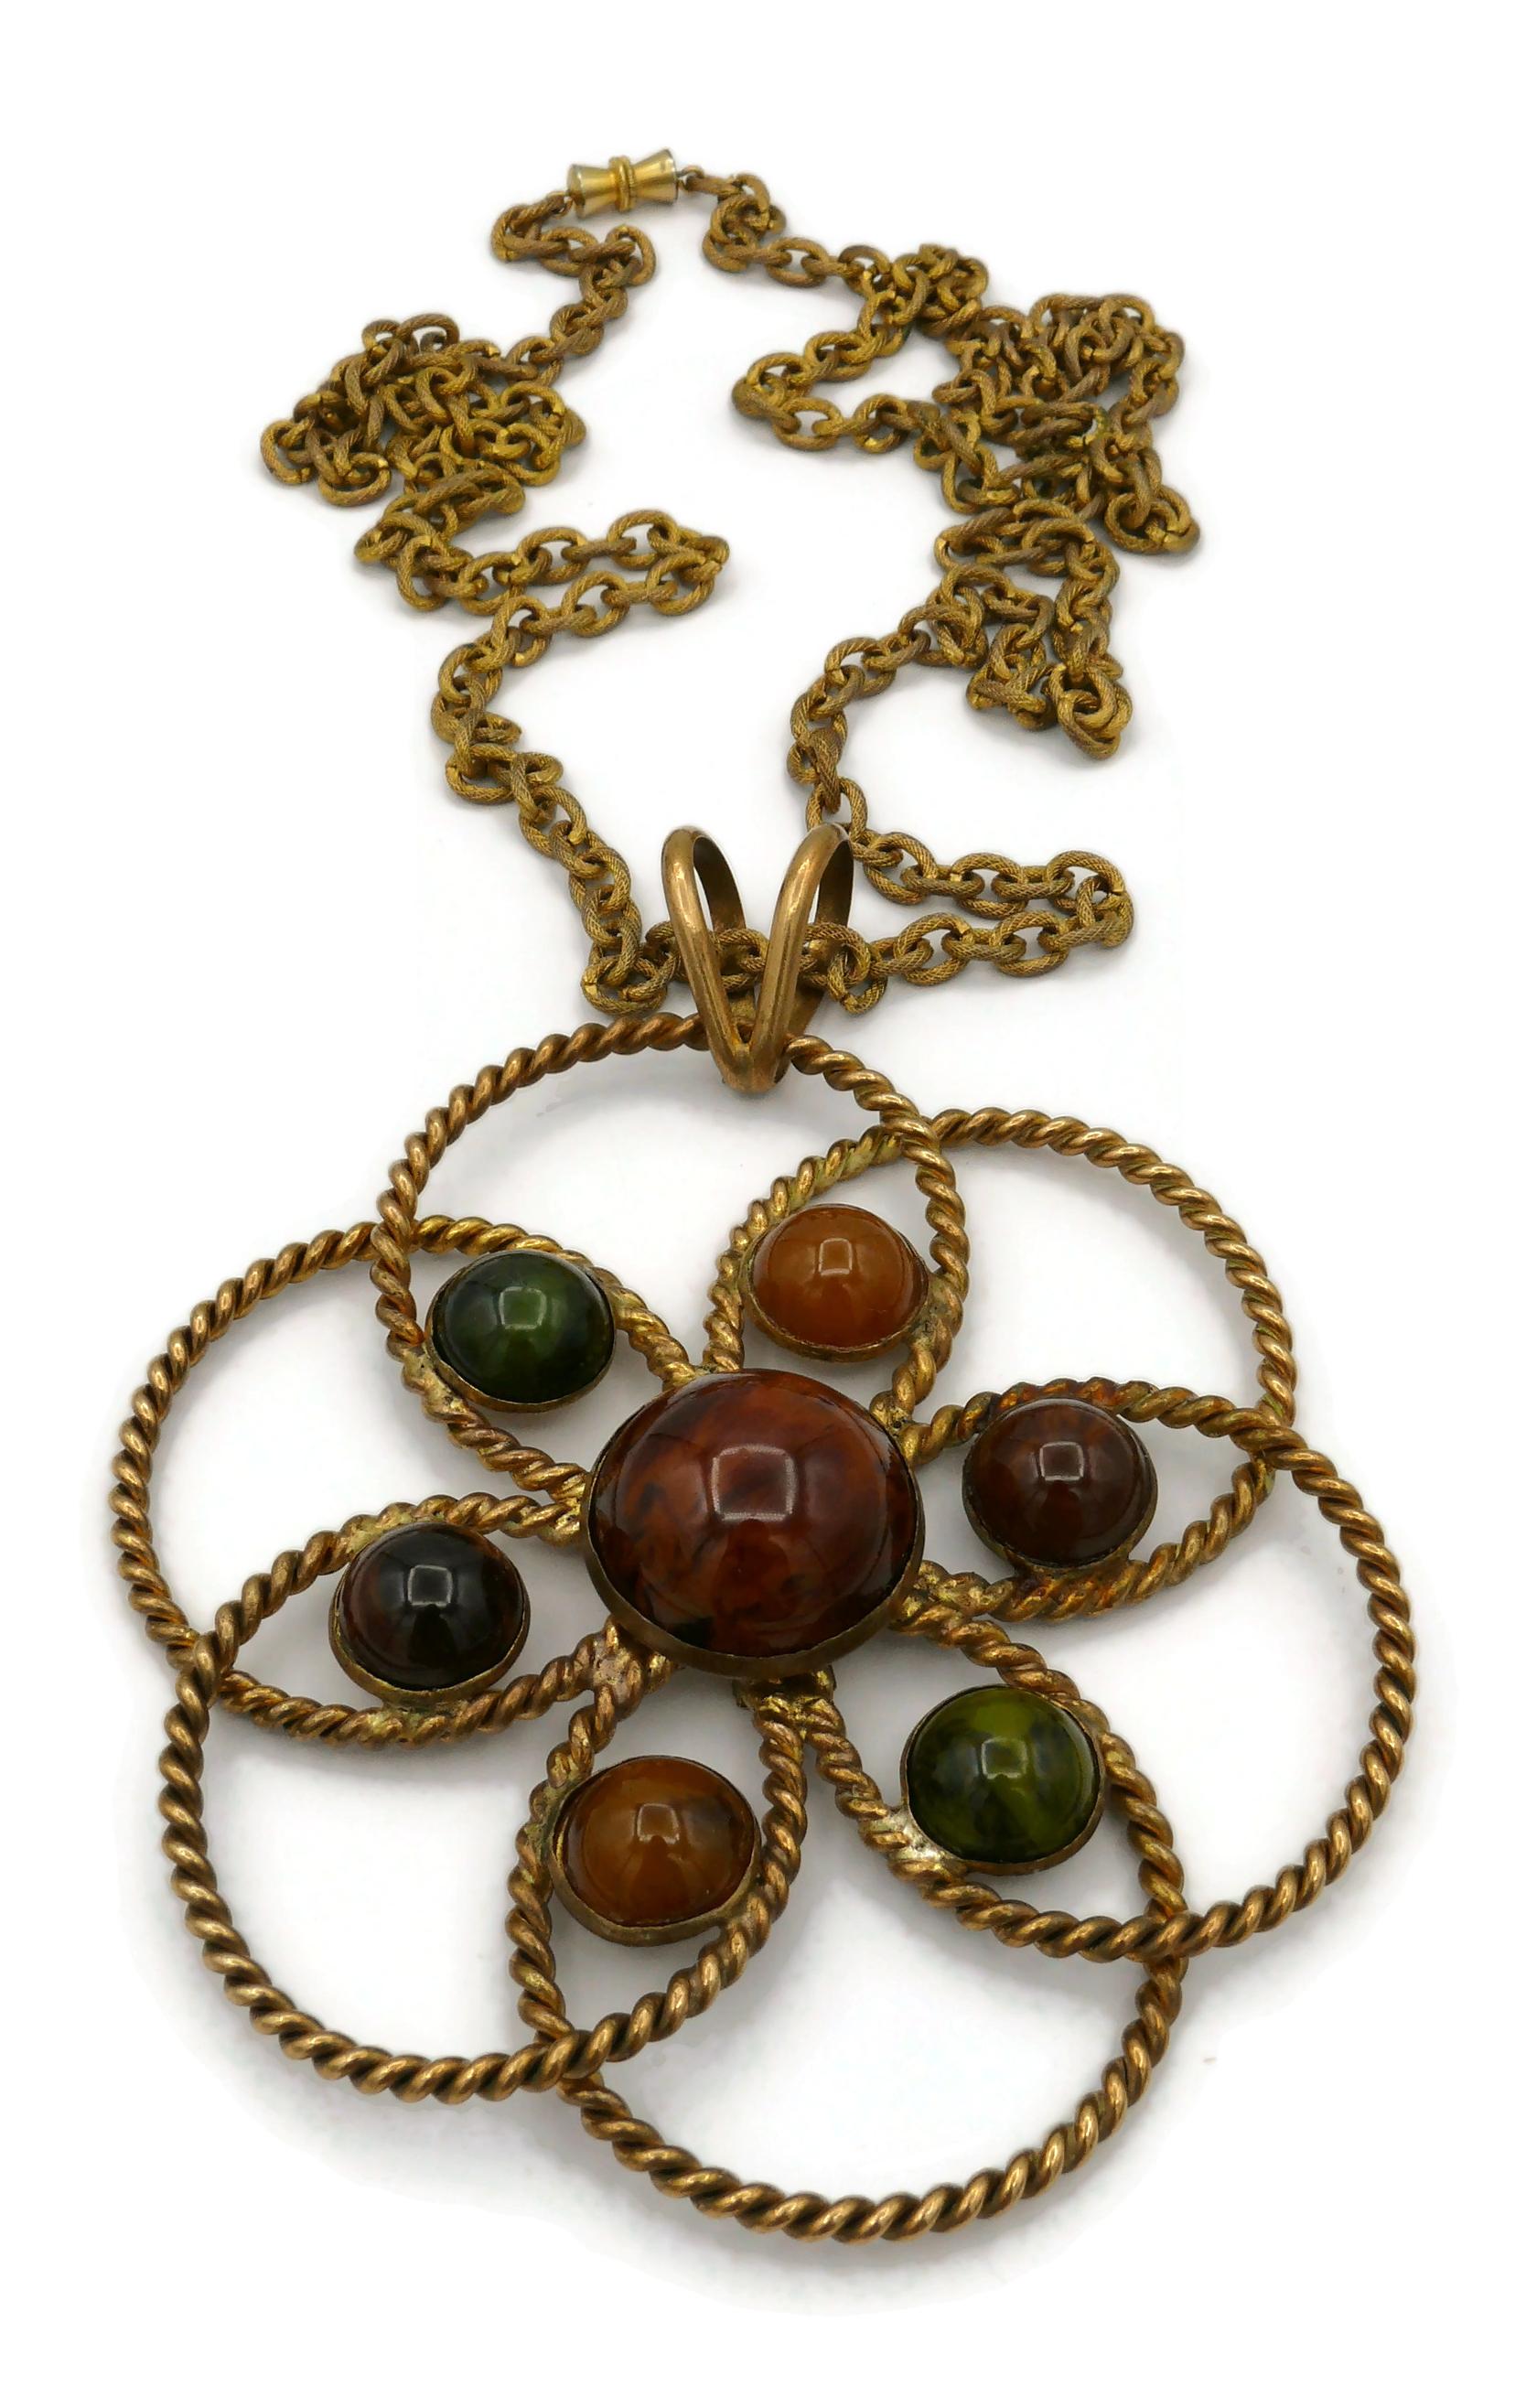 YVES SAINT LAURENT by ROGER SCEMAMA Vintage Massive Flower Pendant Necklace 1